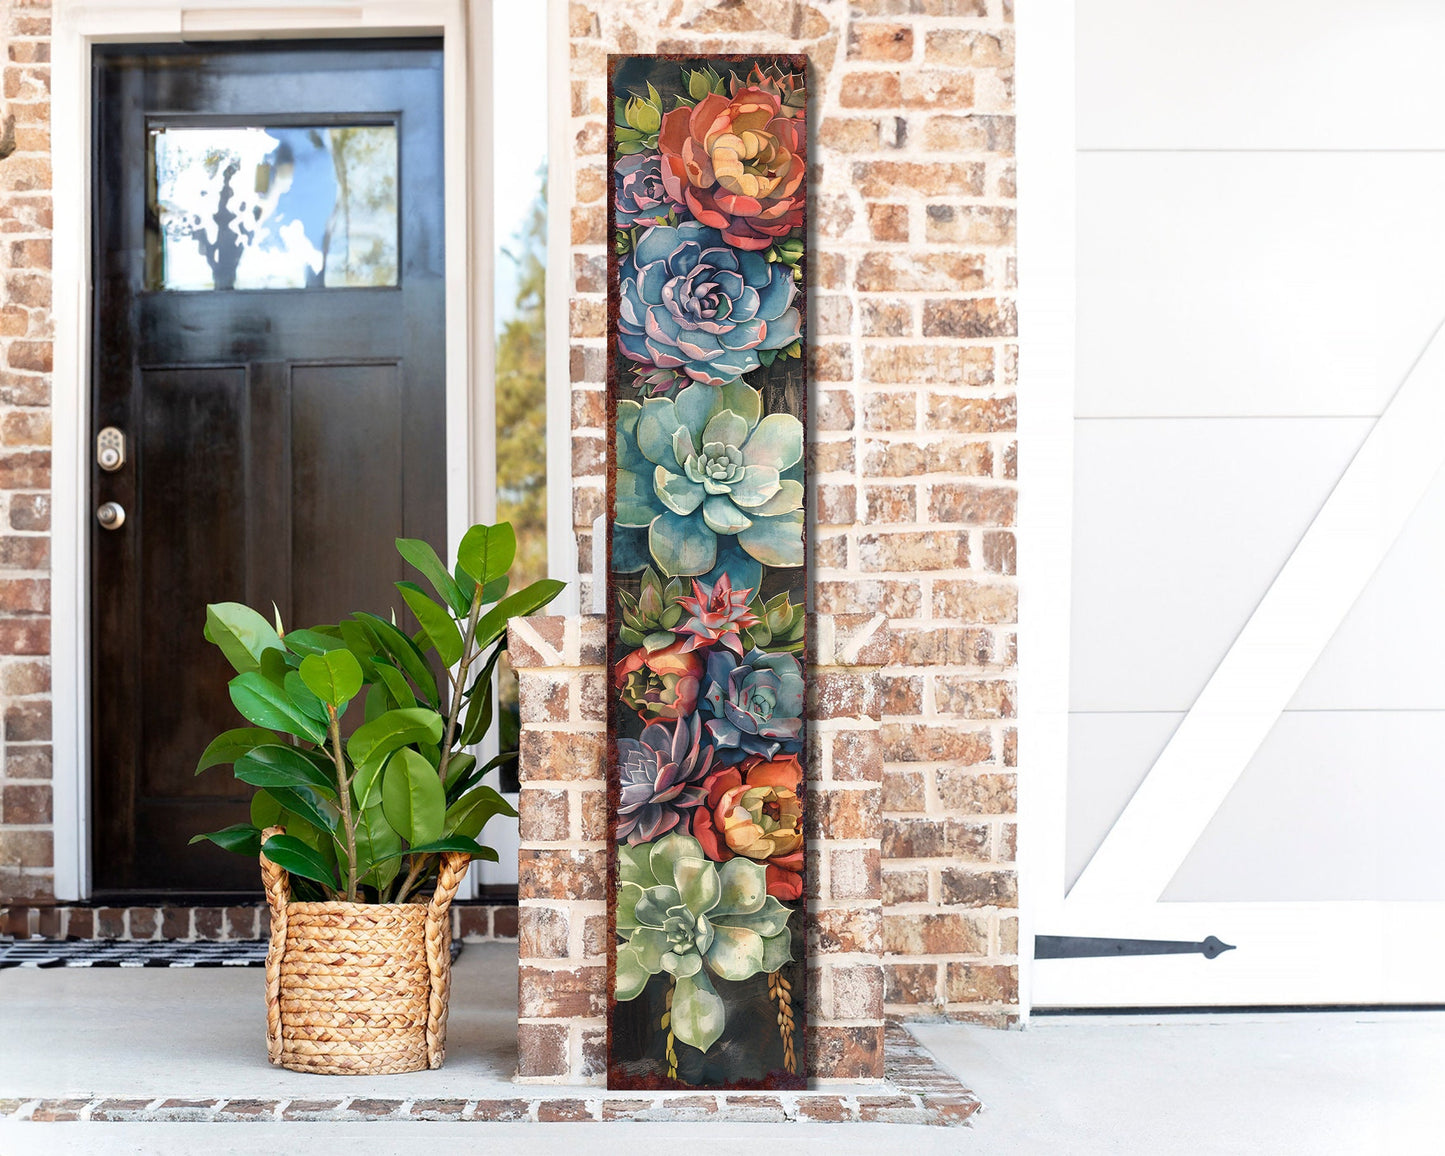 48-Inch Spring Porch Sign with Succulent Design | Front Door Porch Decor, Rustic Farmhouse Outdoor Entryway Display Board